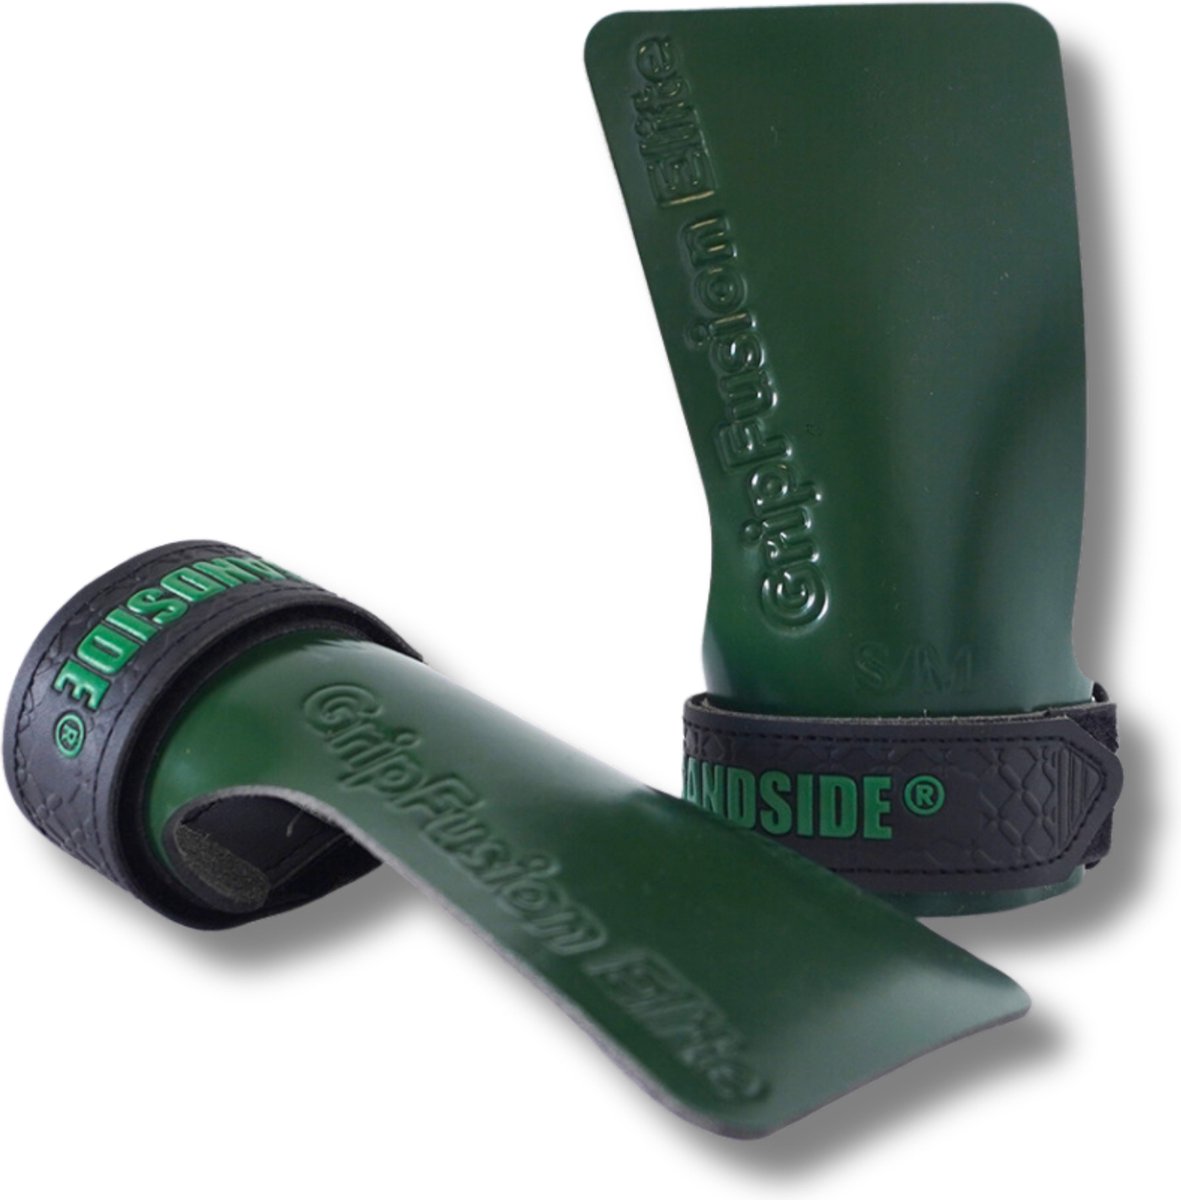 Sandside - CrossFit Grips Elite 2.0 - Sticky Hand Grips - No Chalk - Fitness Handschoenen - Fingerless Grips - Army Green S/M